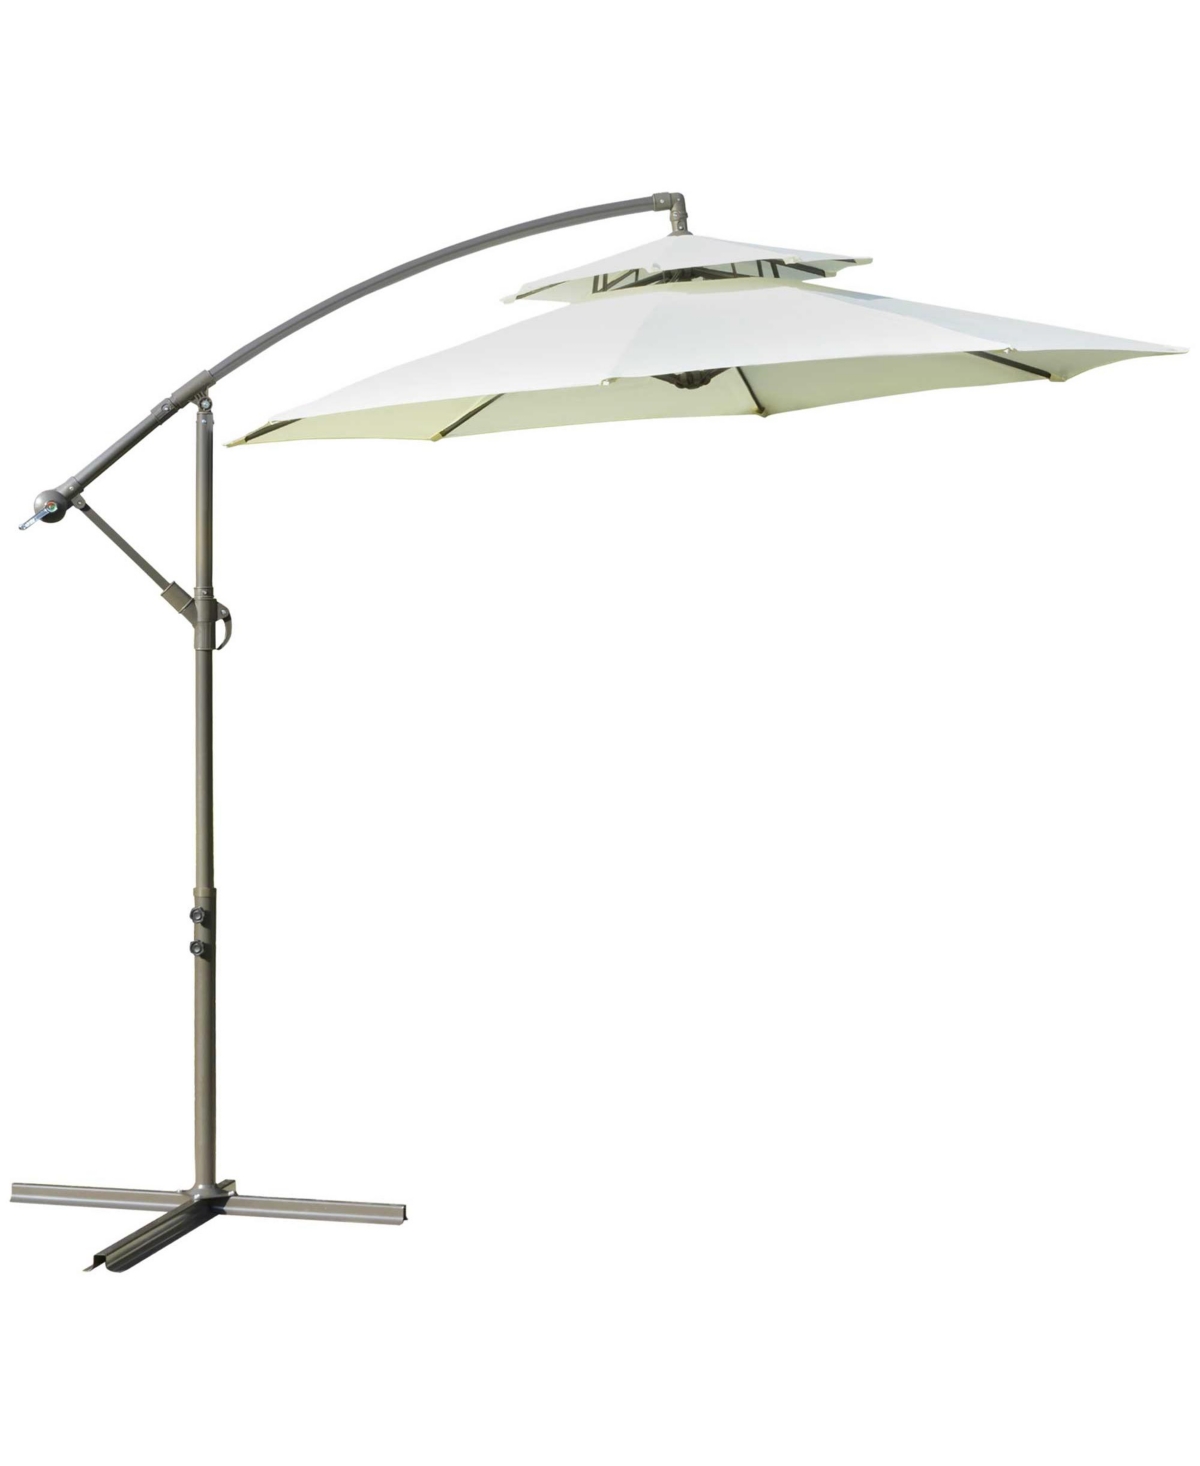 9' 2-Tier Cantilever Umbrella with Crank Handle, Cross Base and 8 Ribs, Garden Patio Umbrella for Backyard, Poolside, and Lawn - White